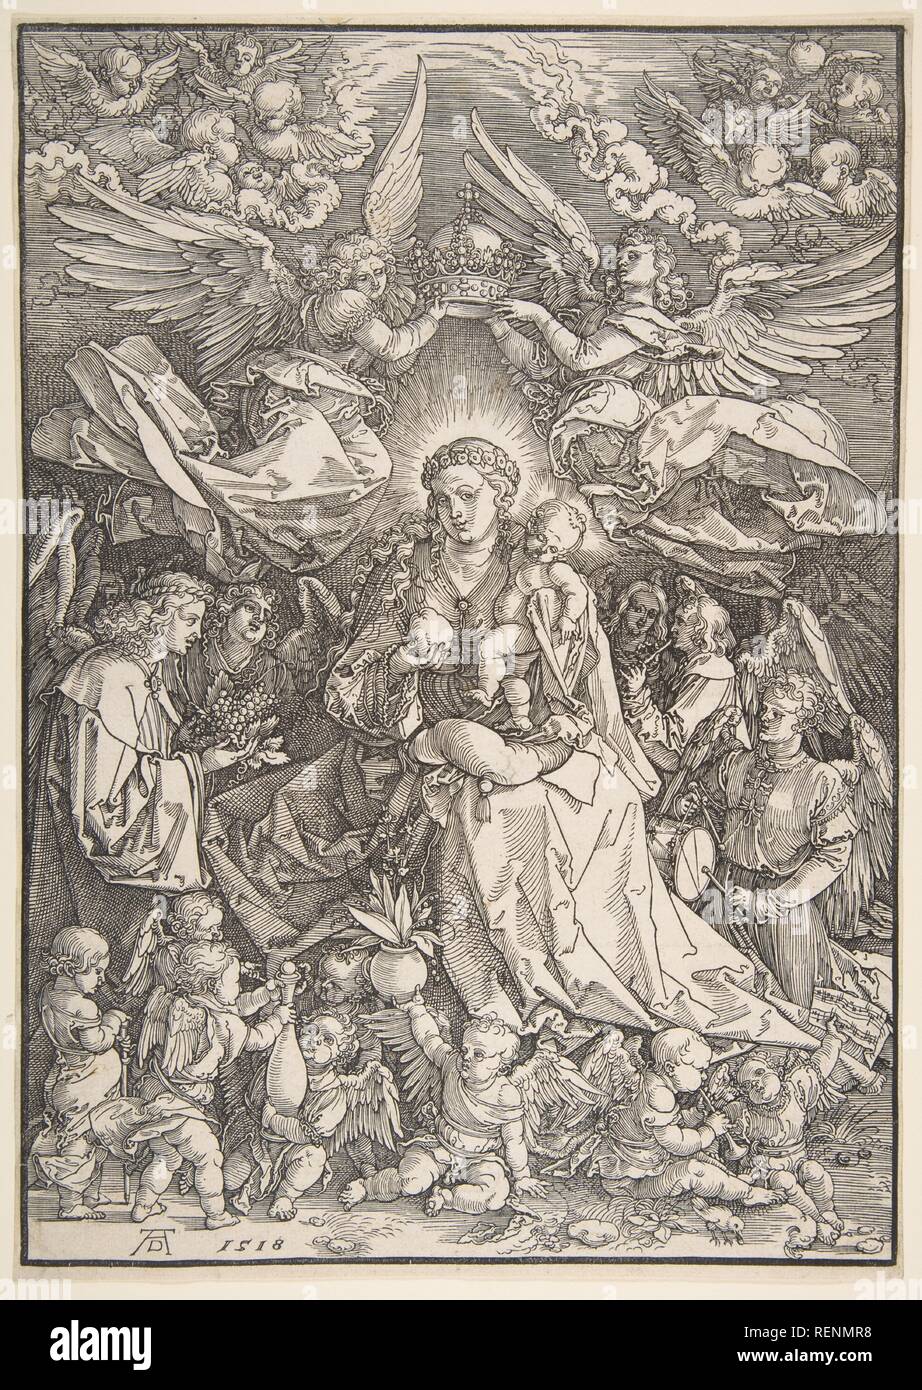 The Virgin Surrounded by Many Angels. Artist: Albrecht Dürer (German, Nuremberg 1471-1528 Nuremberg). Dimensions: sheet: 11 15/16 x 8 5/8 in. (30.3 x 21.9 cm)  block: 11 11/16 x 8 5/16 in. (29.7 x 21.1 cm). Date: 1518. Museum: Metropolitan Museum of Art, New York, USA. Stock Photo